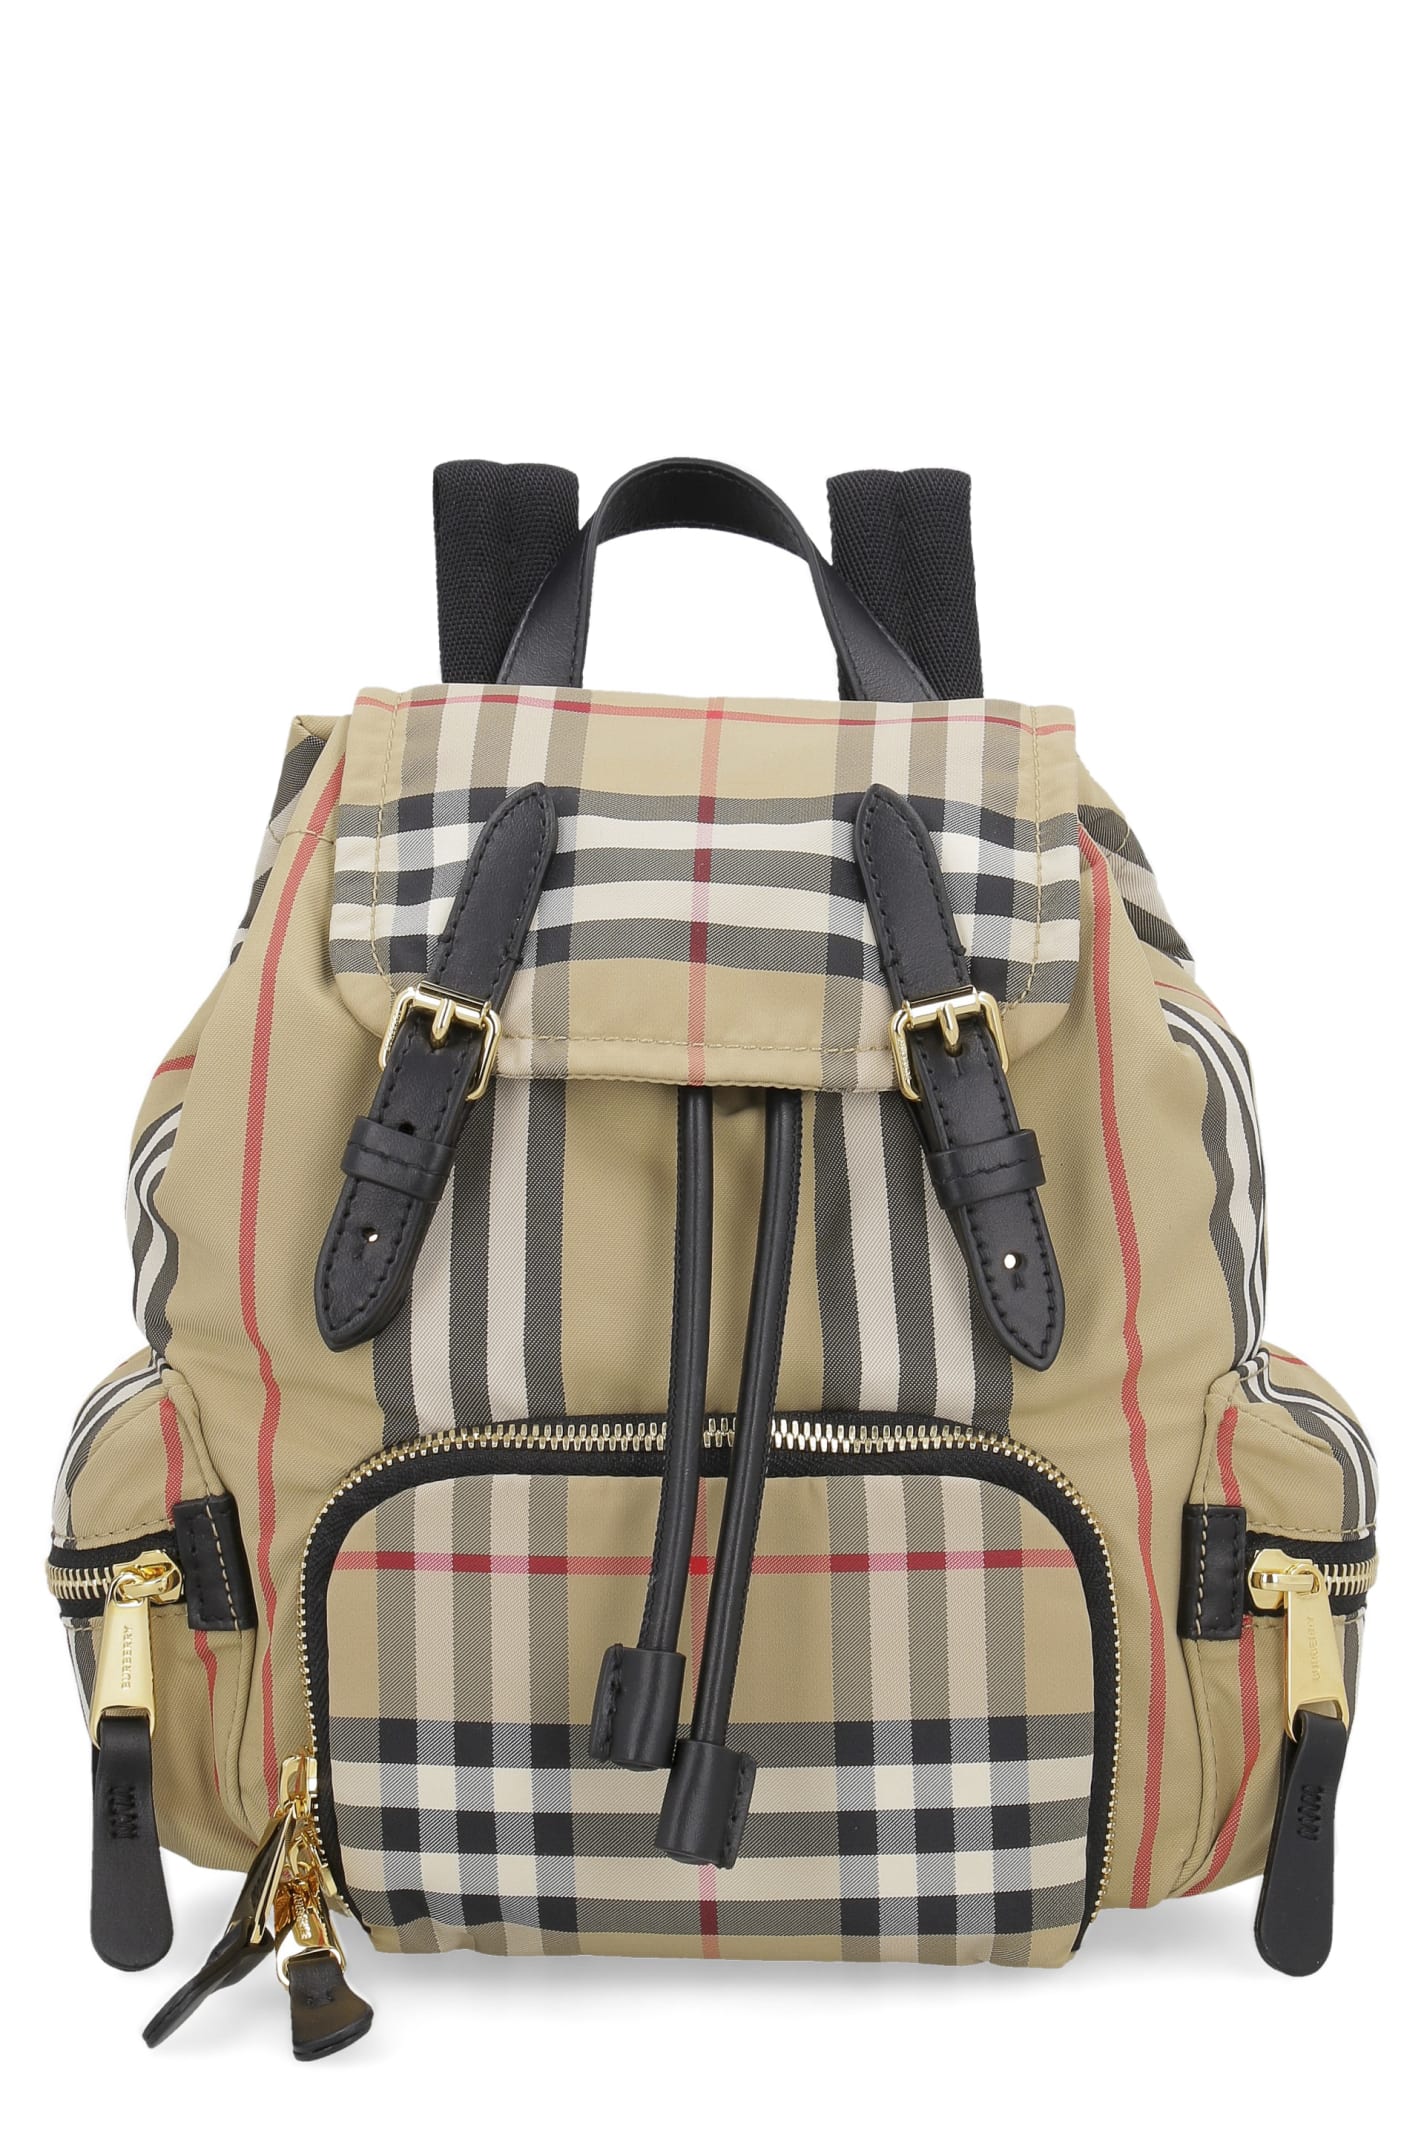 Burberry Rucksack Nylon Backpack In Beige